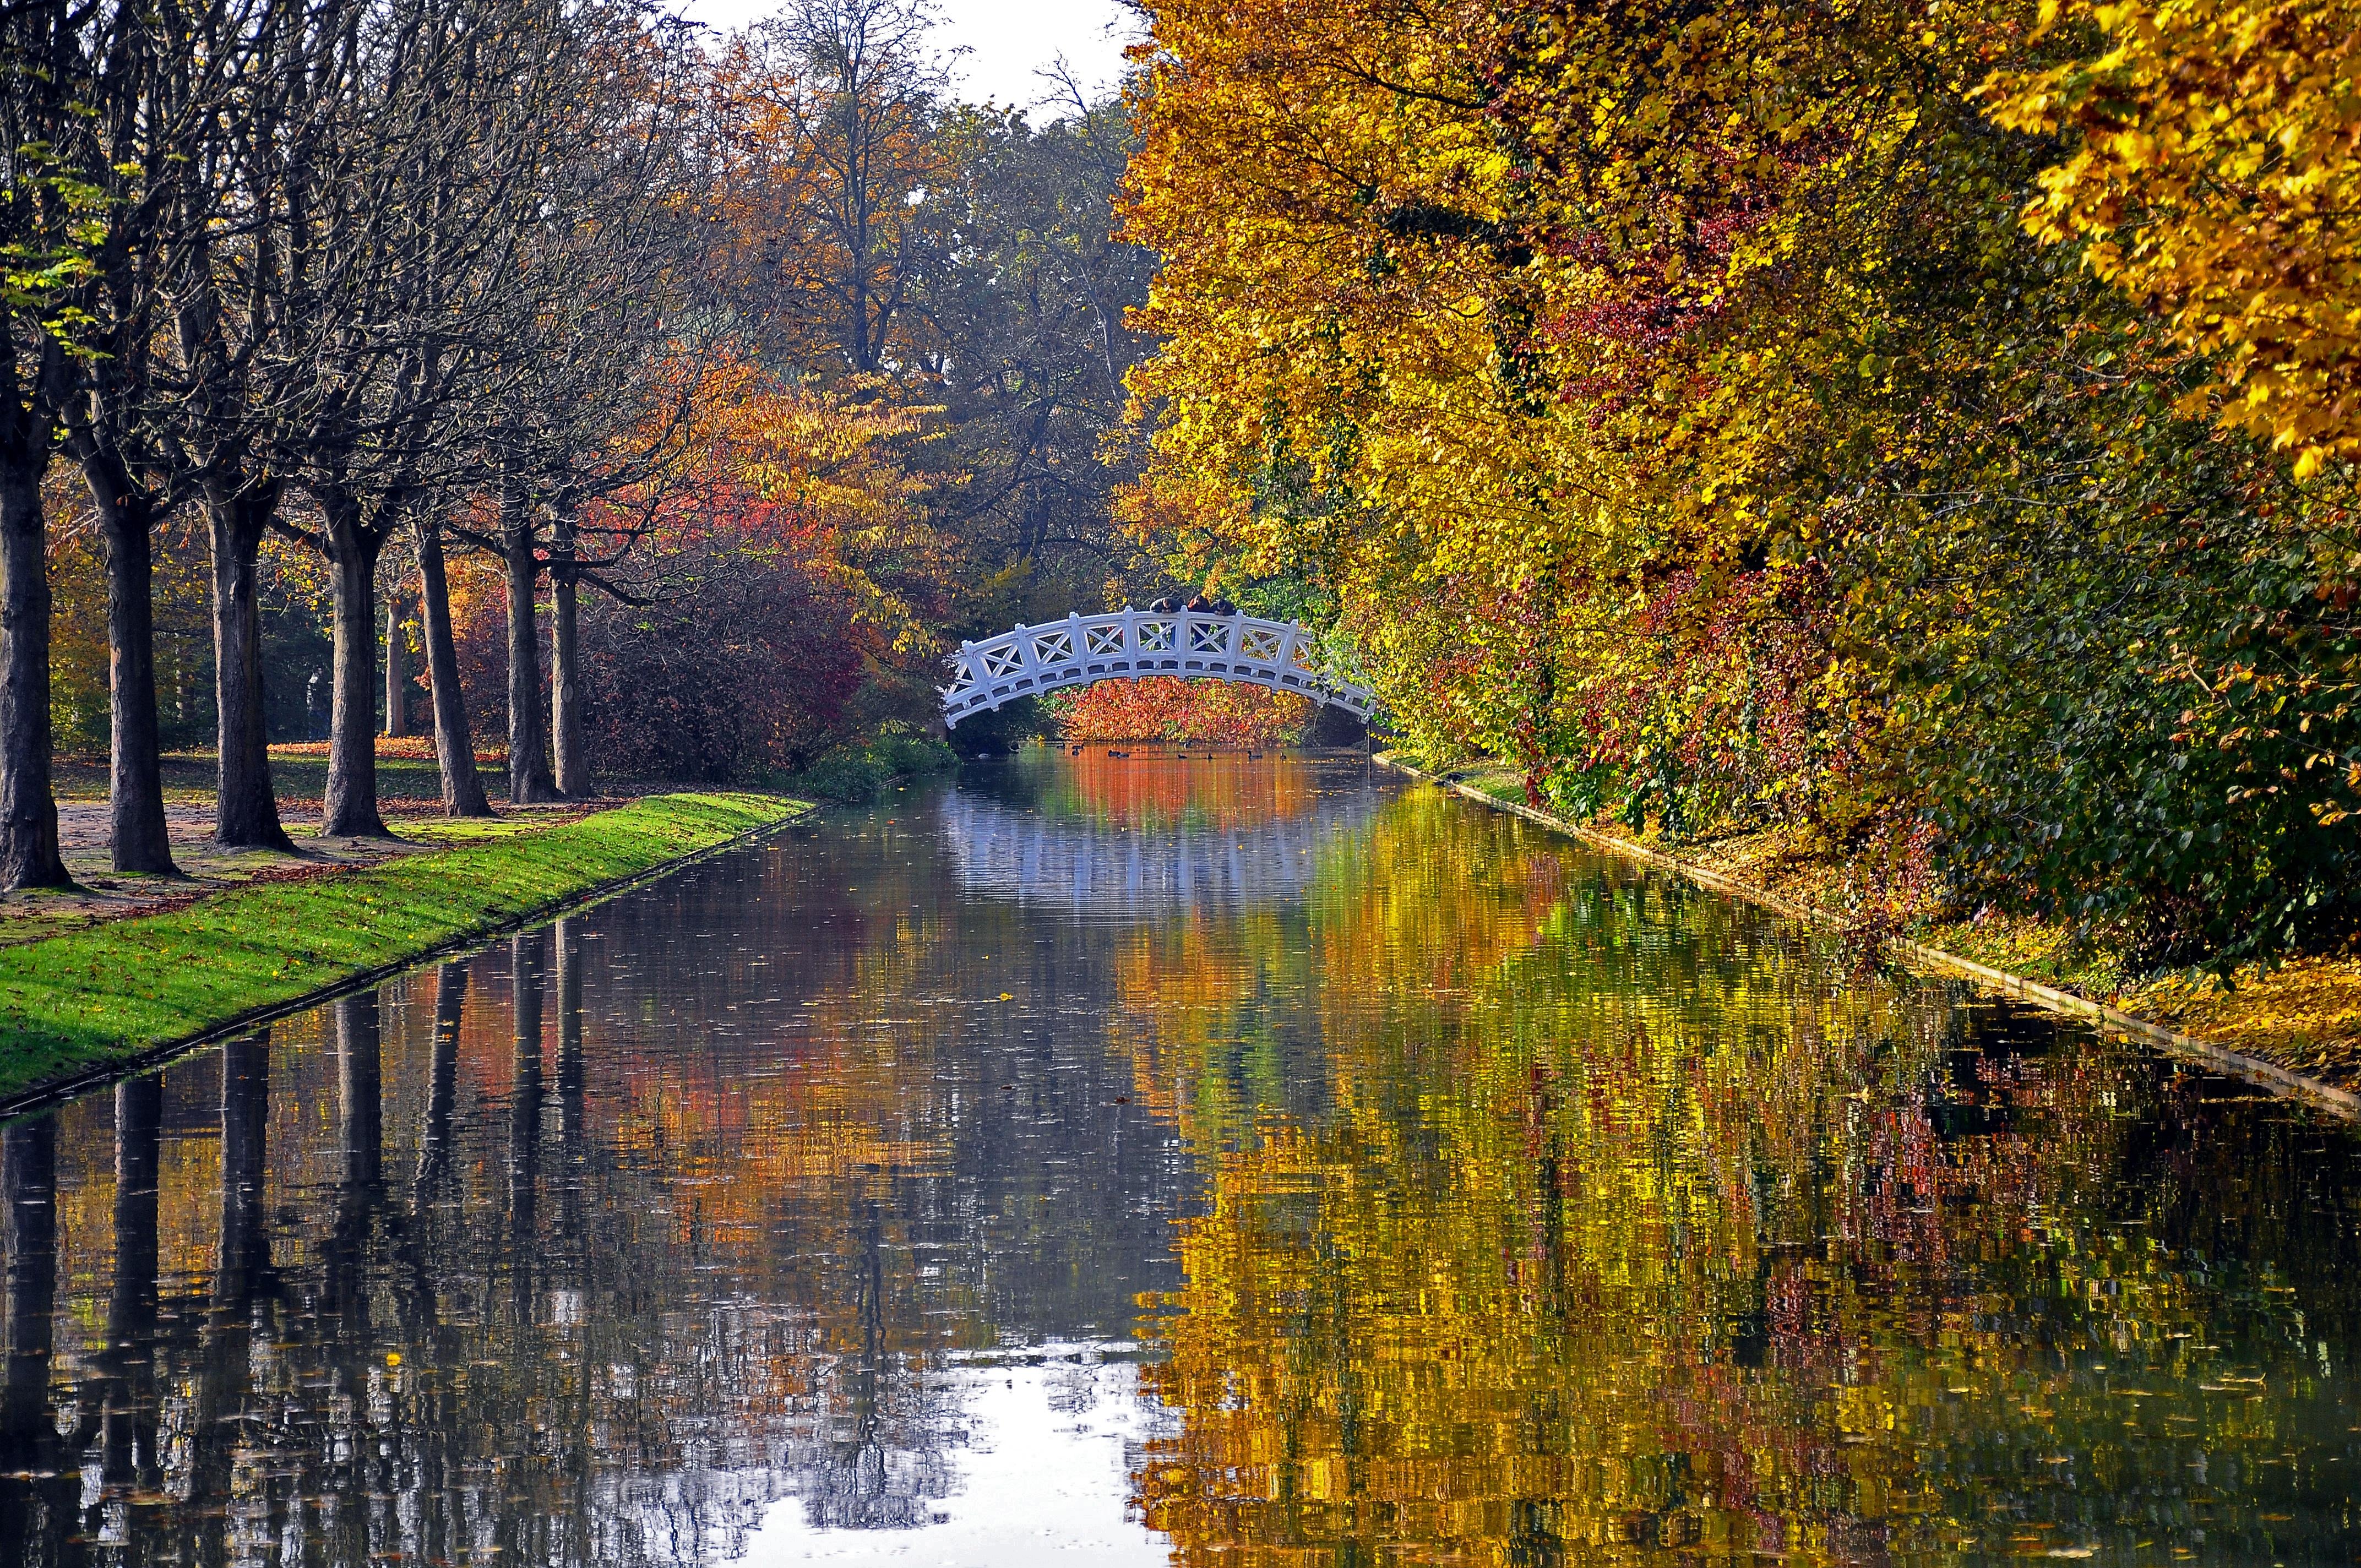 Download wallpaper 4288x2848 autumn, bridge, river, park